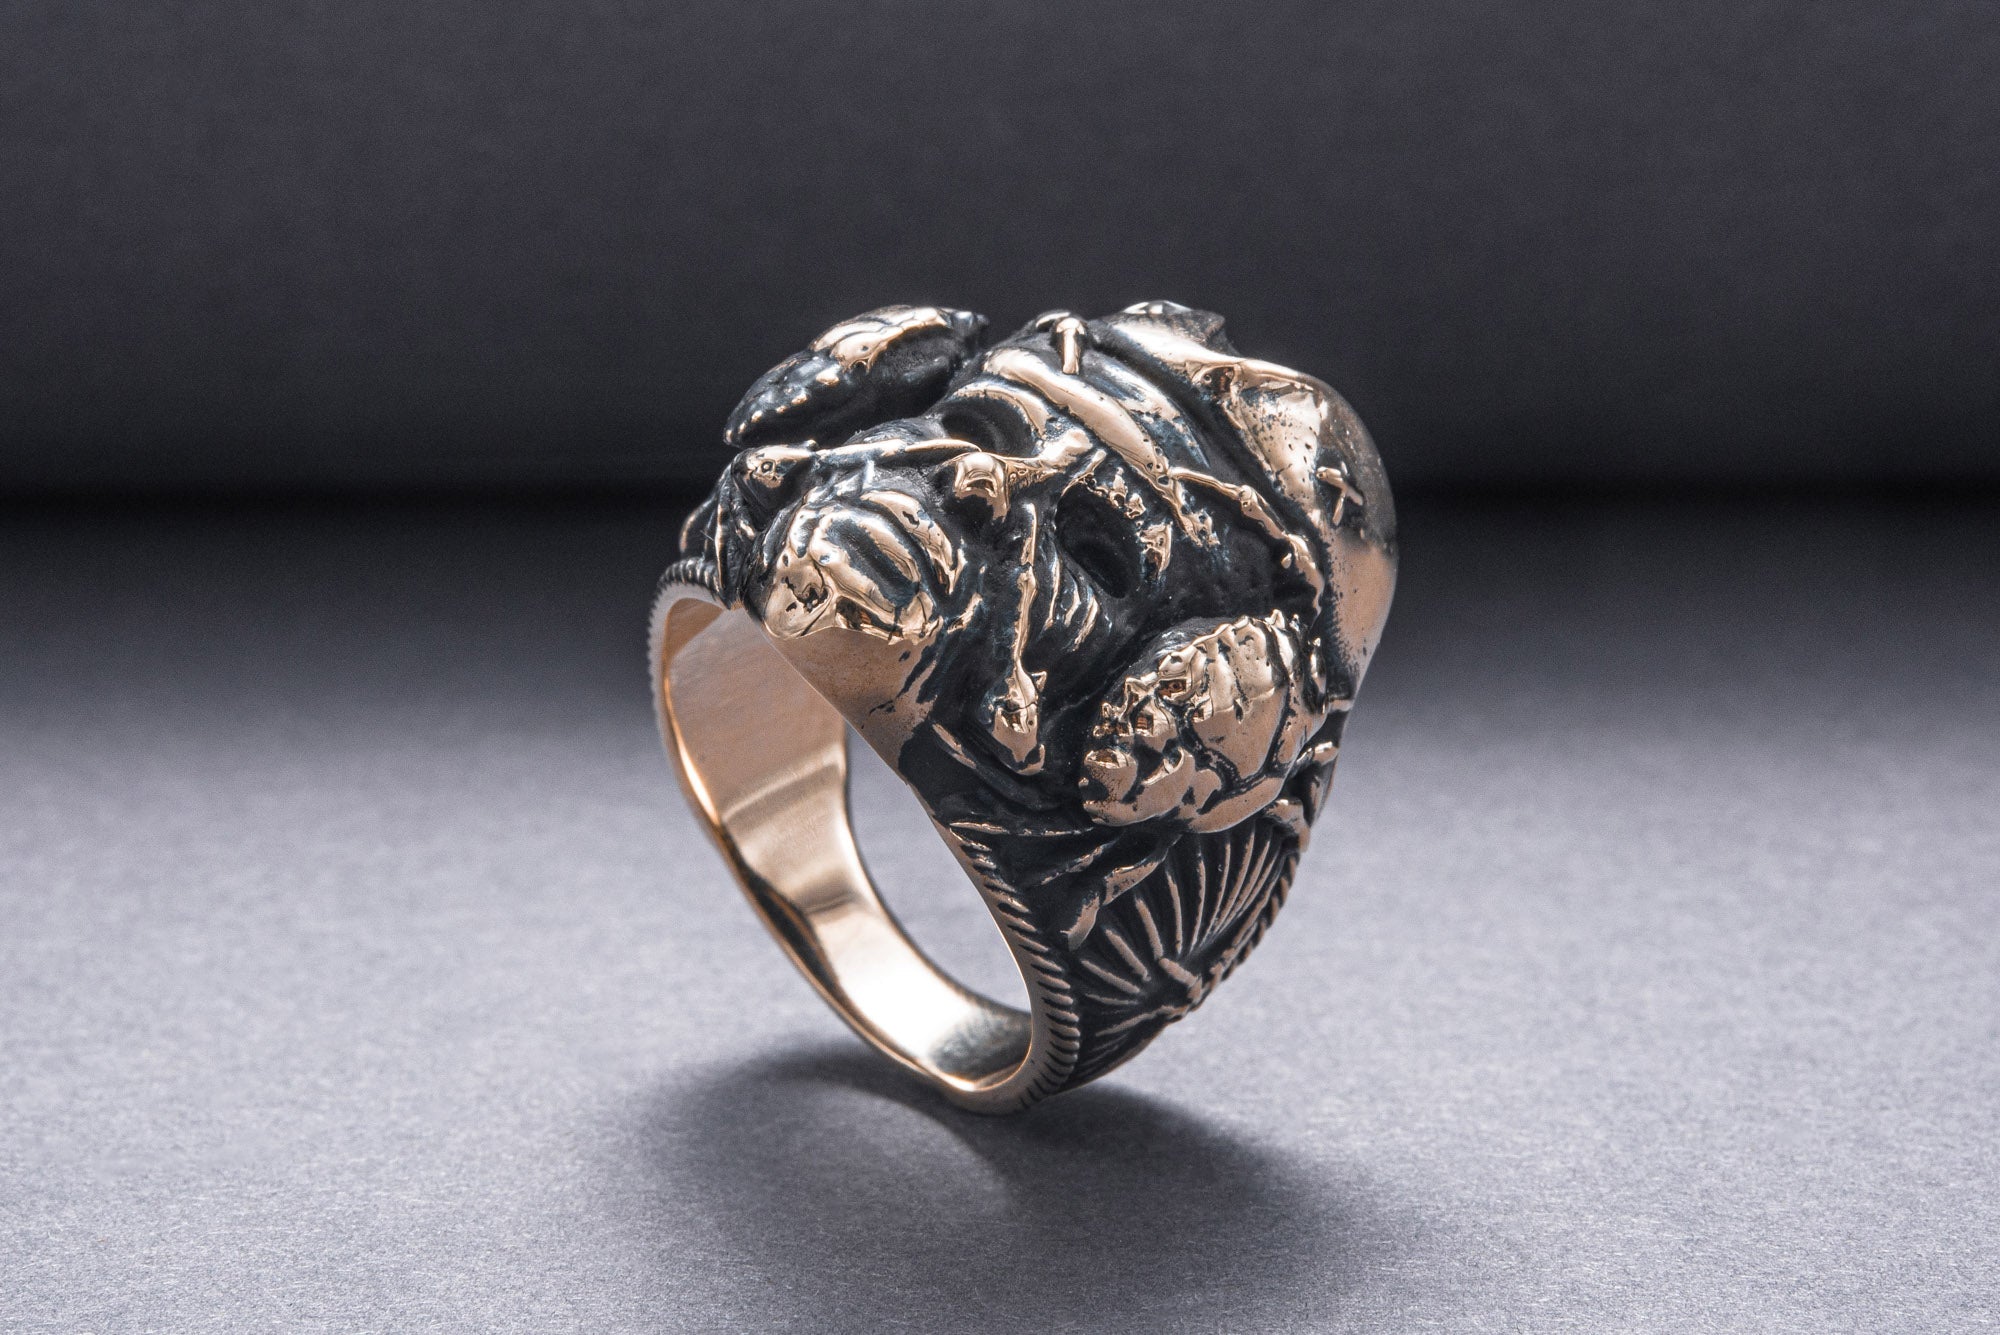 Pirate Handmade Ring Bronze Unique Jewelry - vikingworkshop